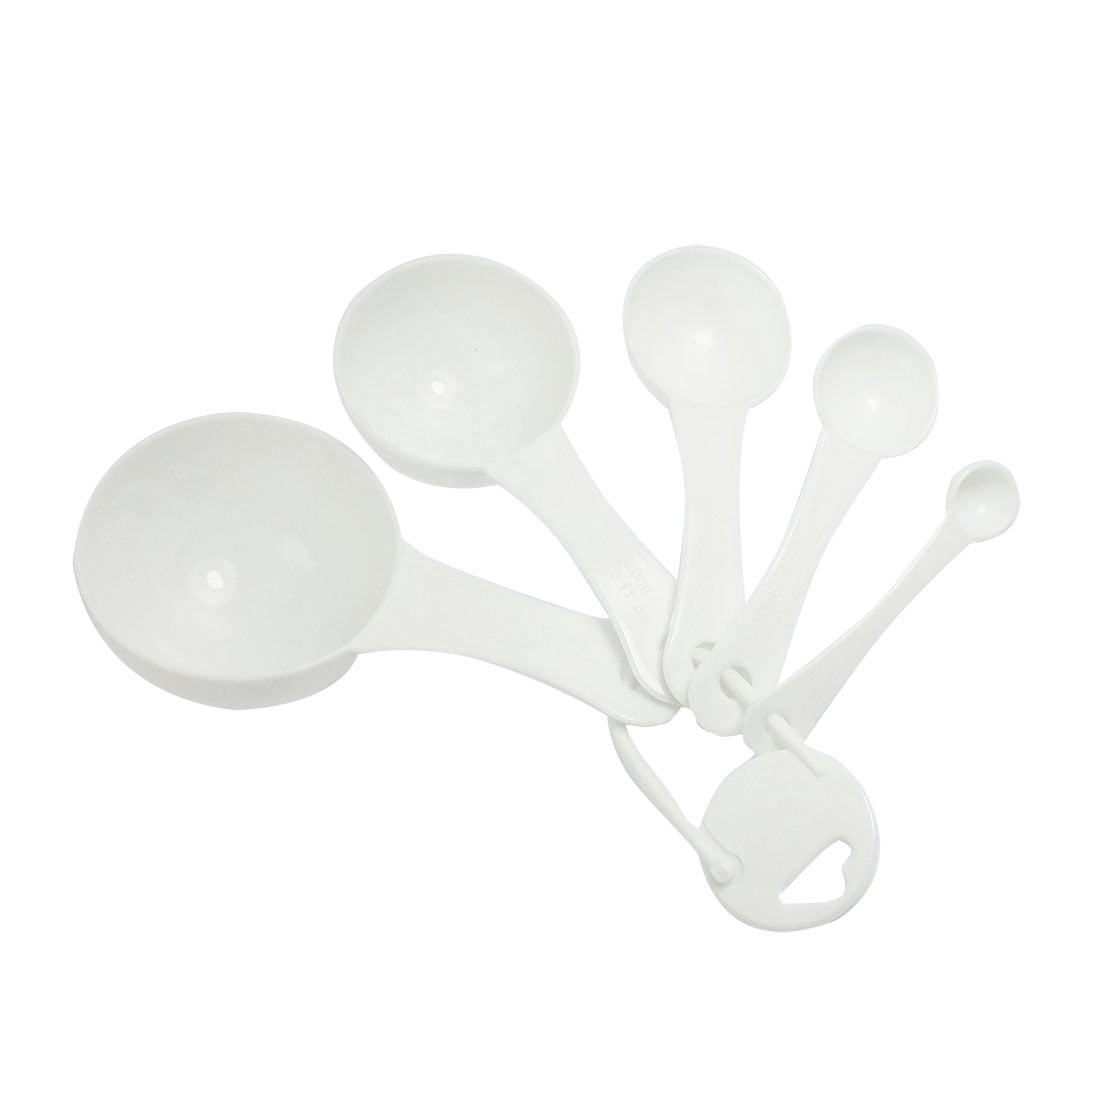 10 Piece Measuring Spoon Set - PureBulk, Inc.